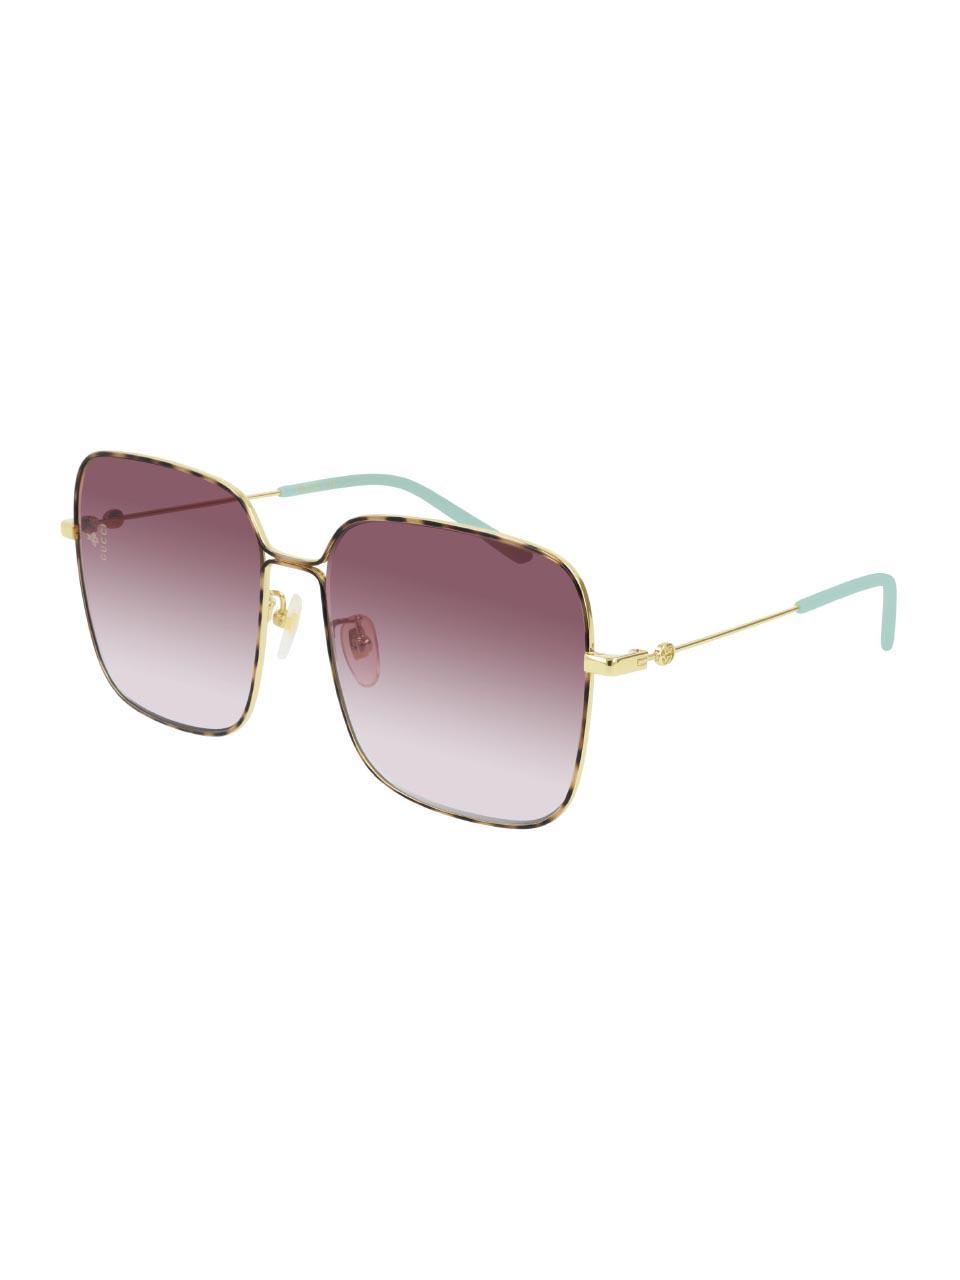 Gucci, women's sunglasses | Frankfurt Airport Online Shopping